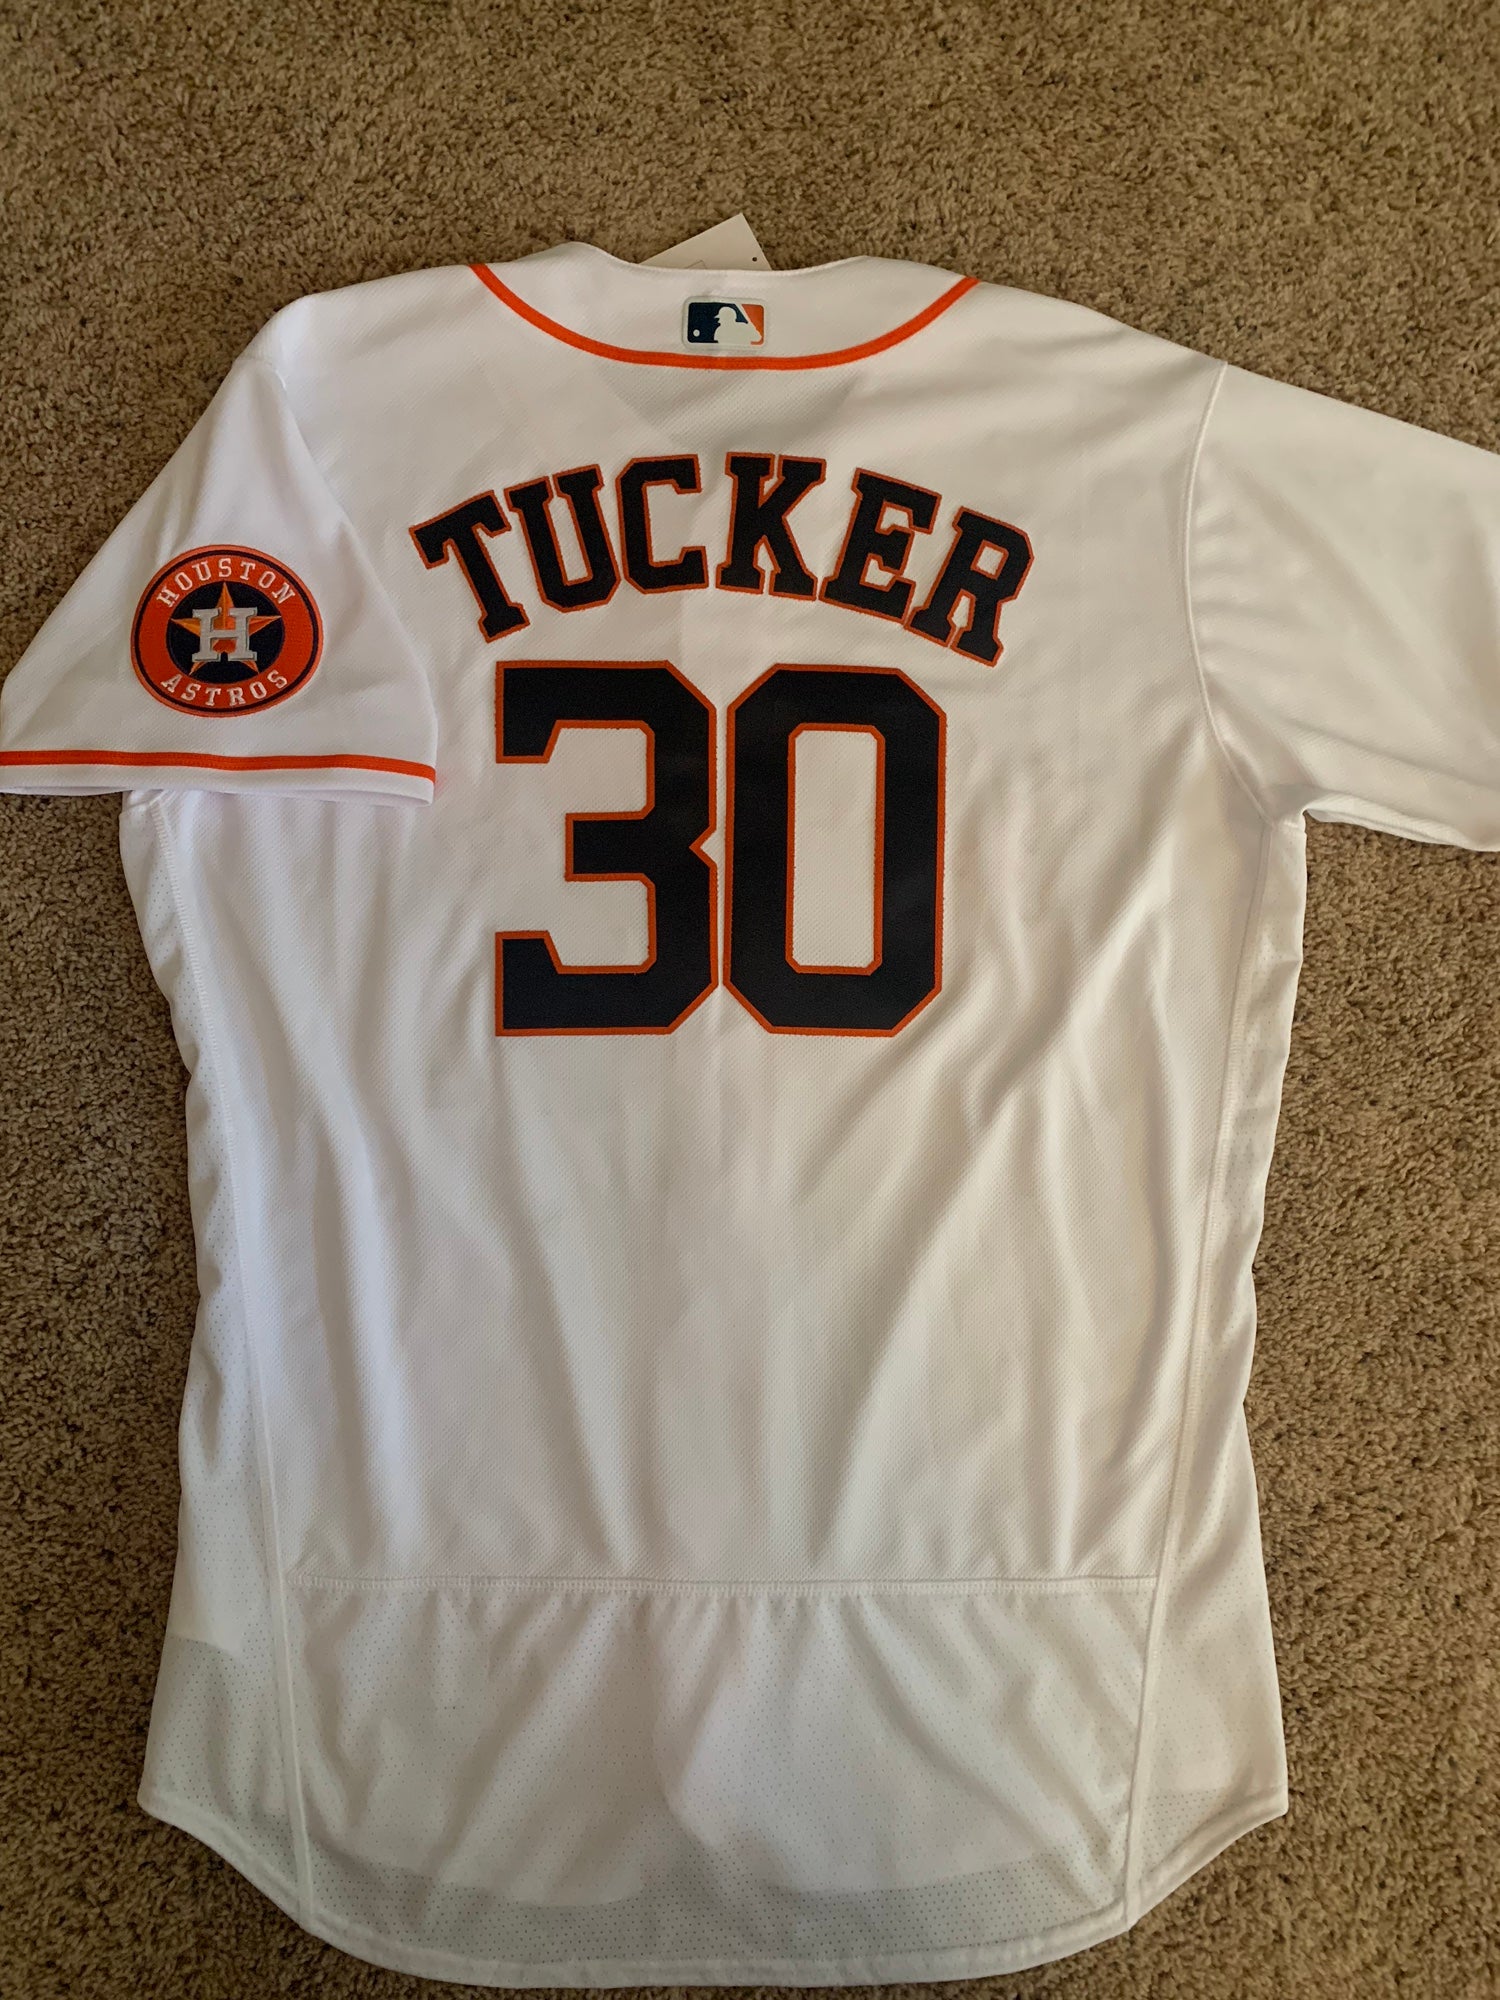 Kyle Tucker Jersey, Authentic Astros Kyle Tucker Jerseys & Uniform - Astros  Store